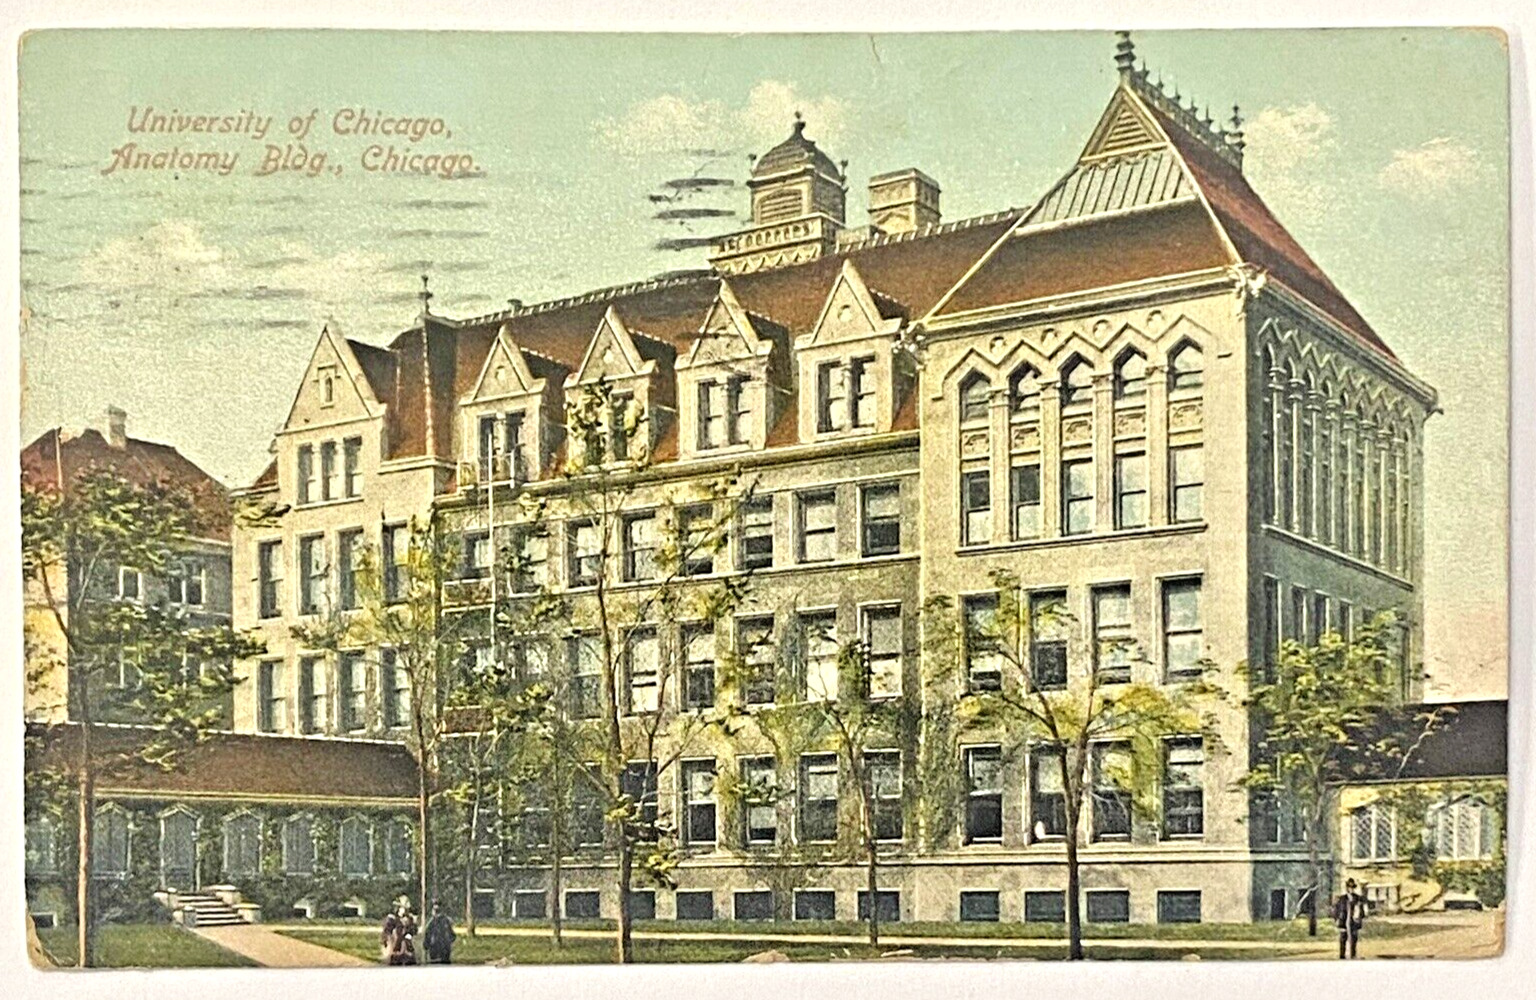 Chicago Illinois Vintage Postcard 1909 University of Chicago Anatomy Building